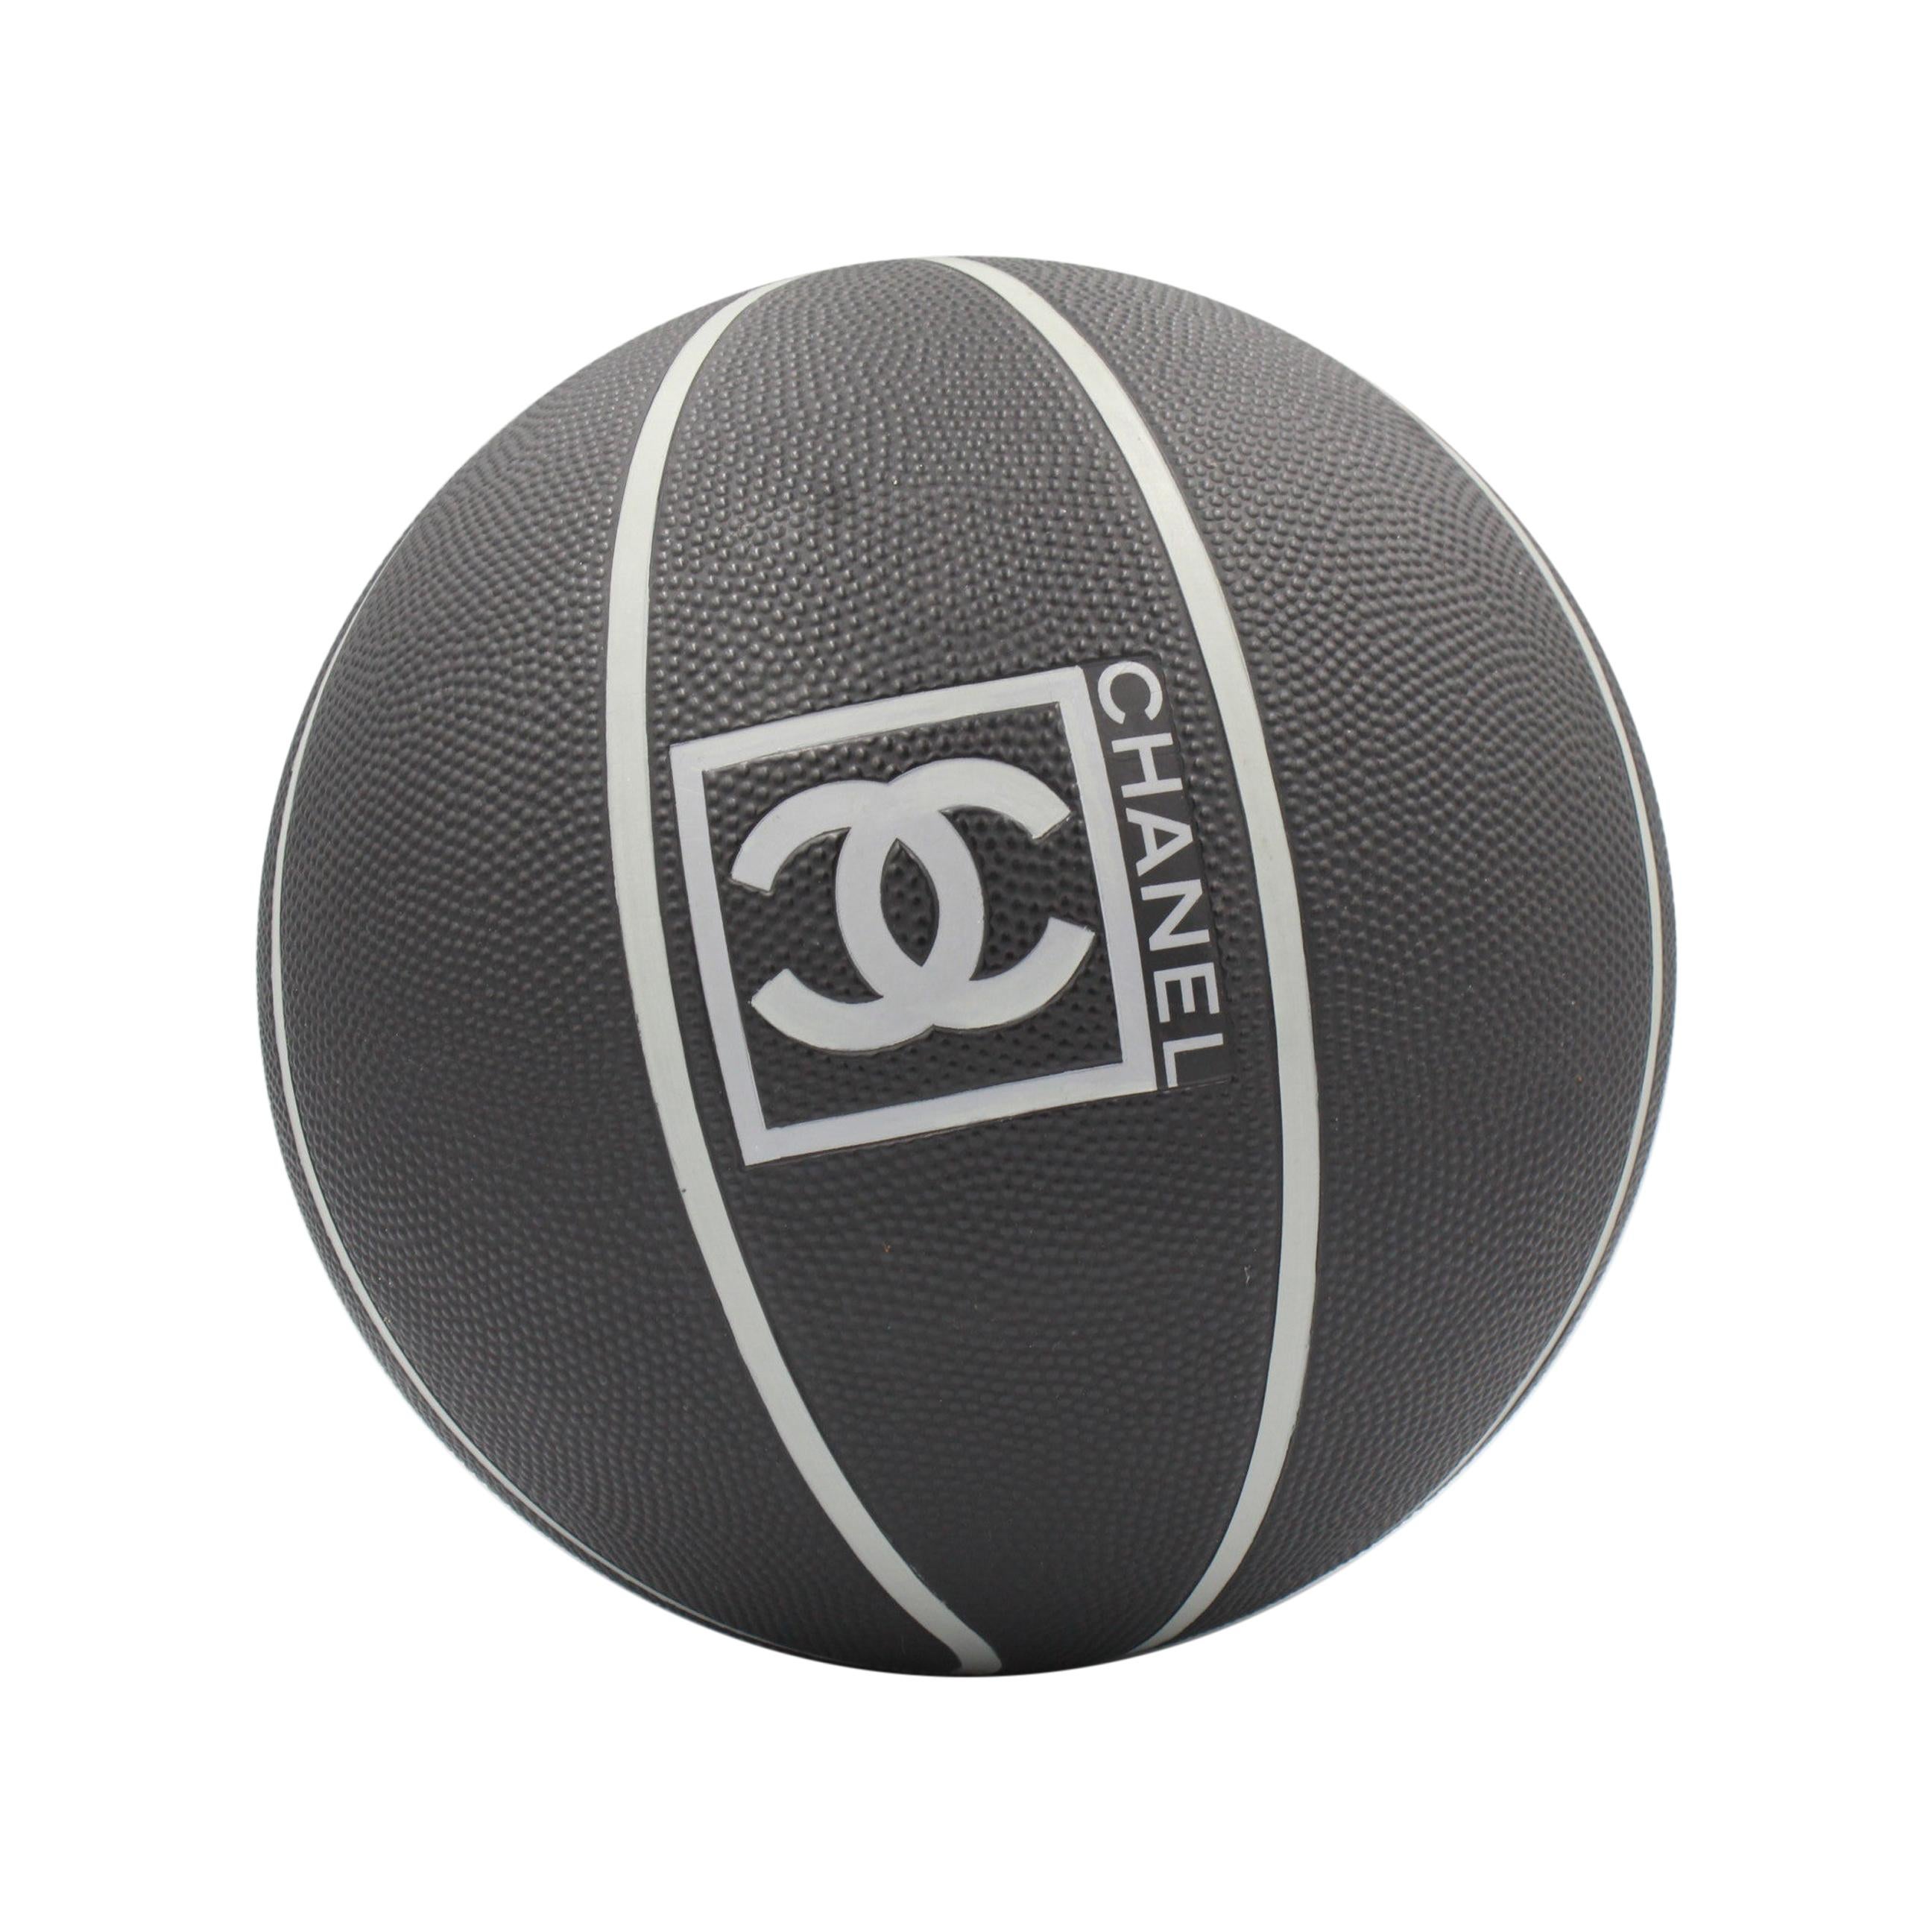 Very rare Chanel black basket ball 